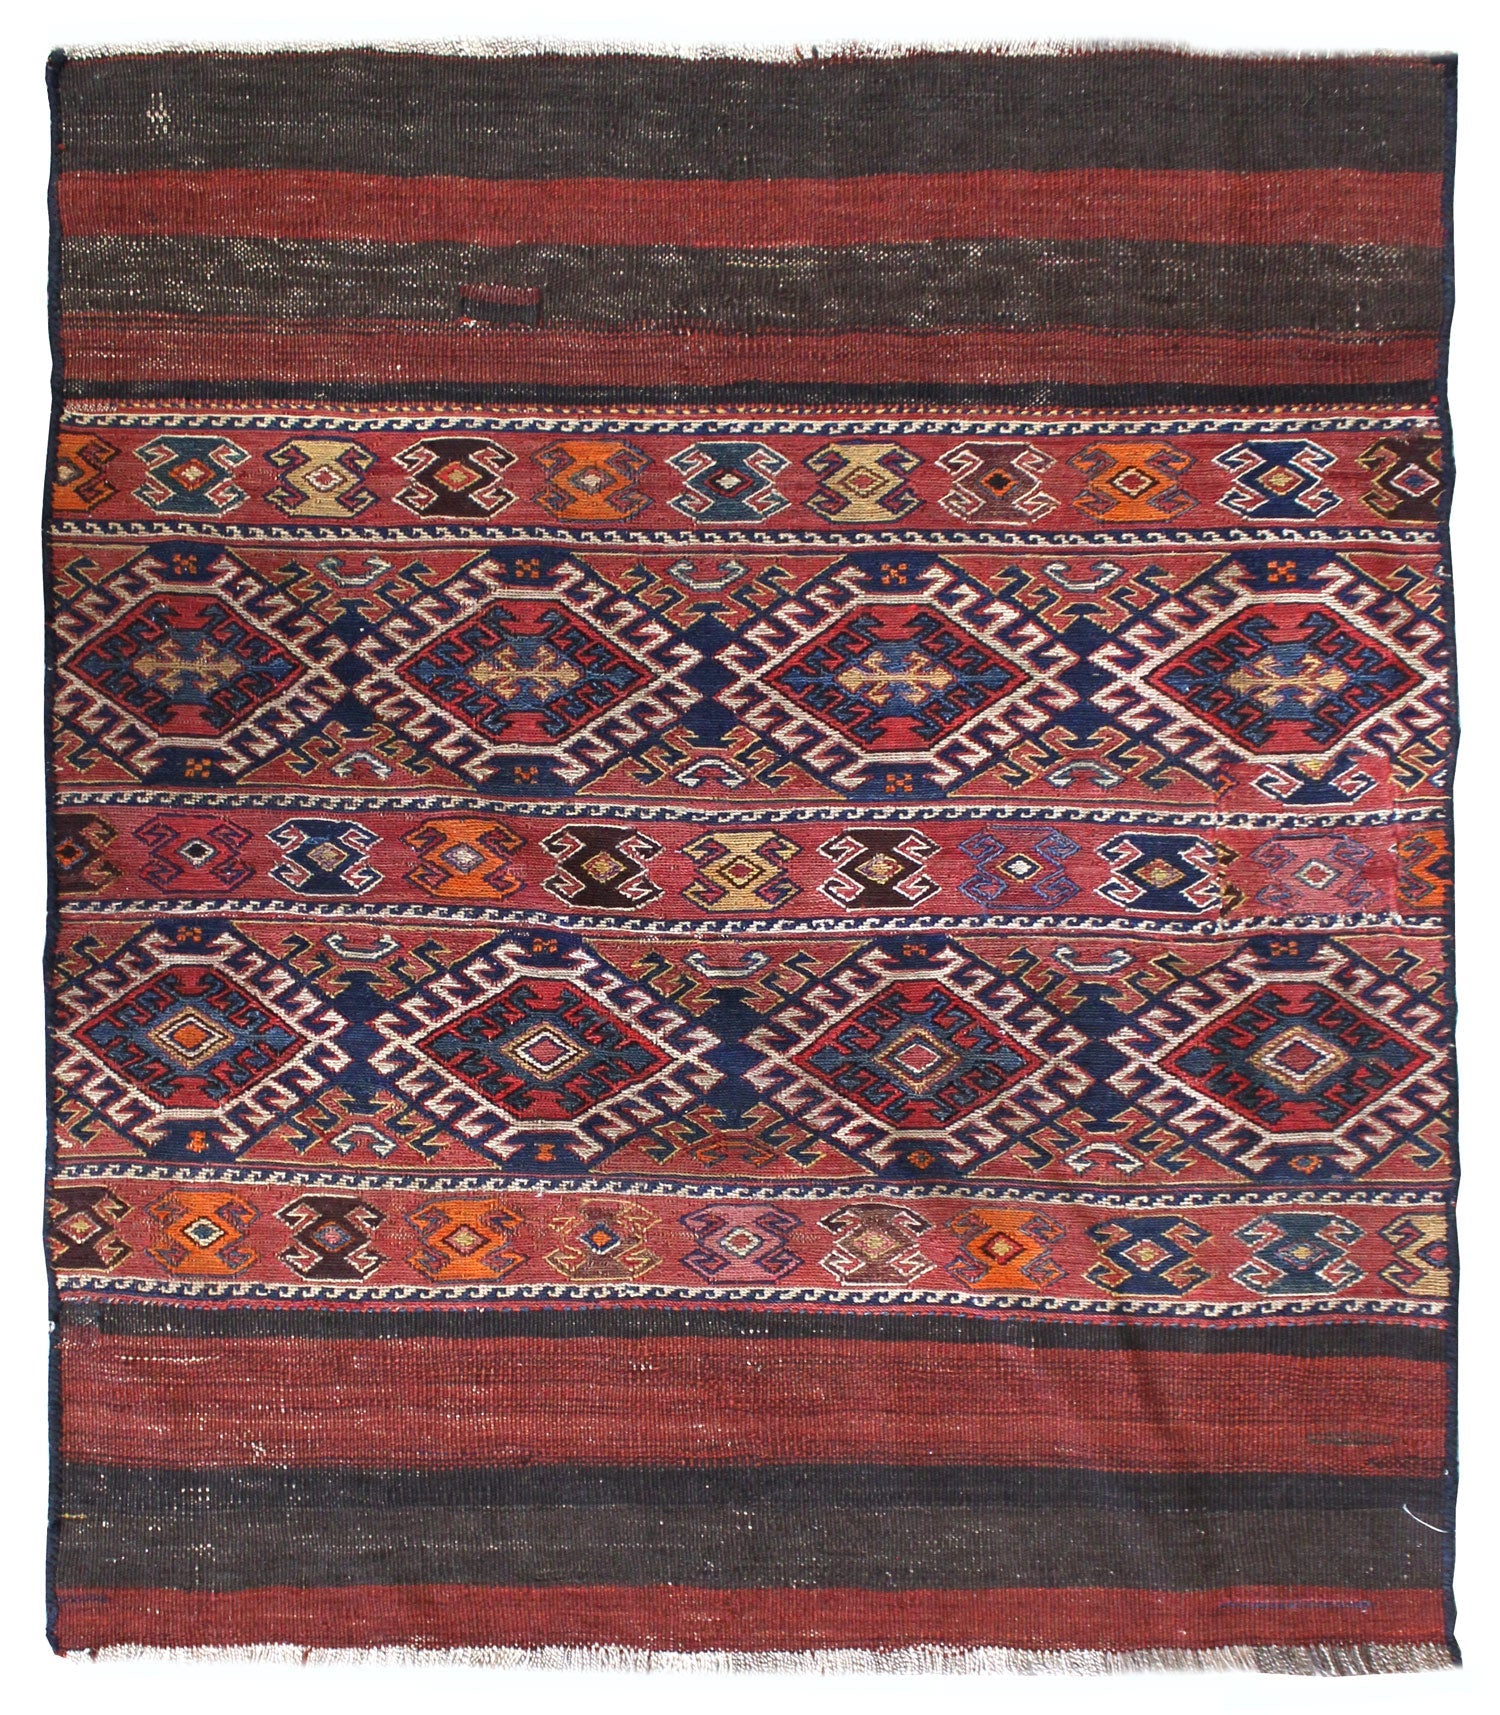 Antique Shasavan Kilim Handwoven Tribal Rug